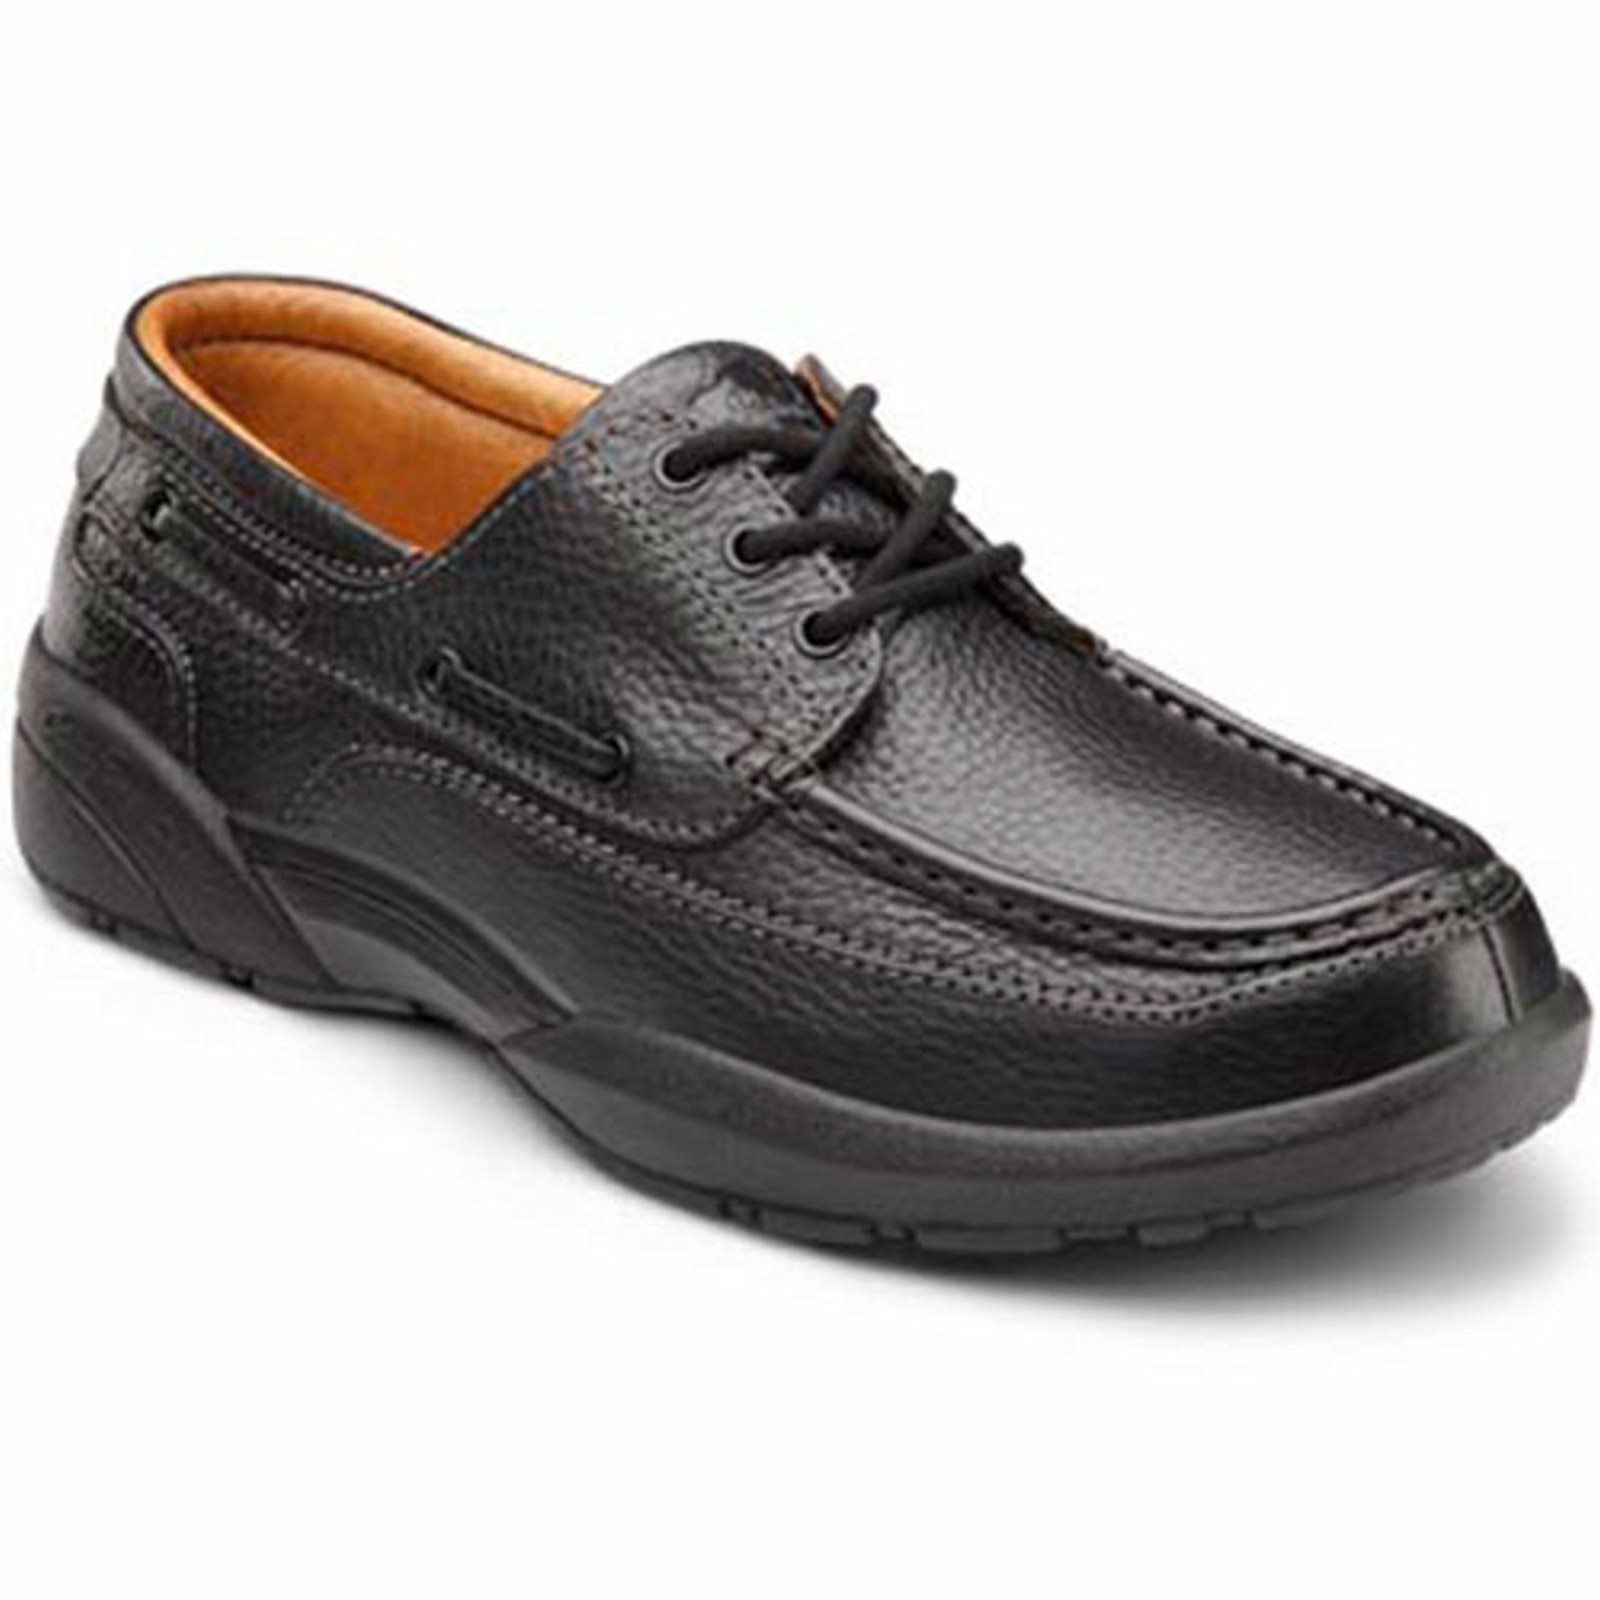 Dr. Comfort Patrick Men's Boat Shoe: 13 Medium (B/D) Black Lace - image 1 of 4